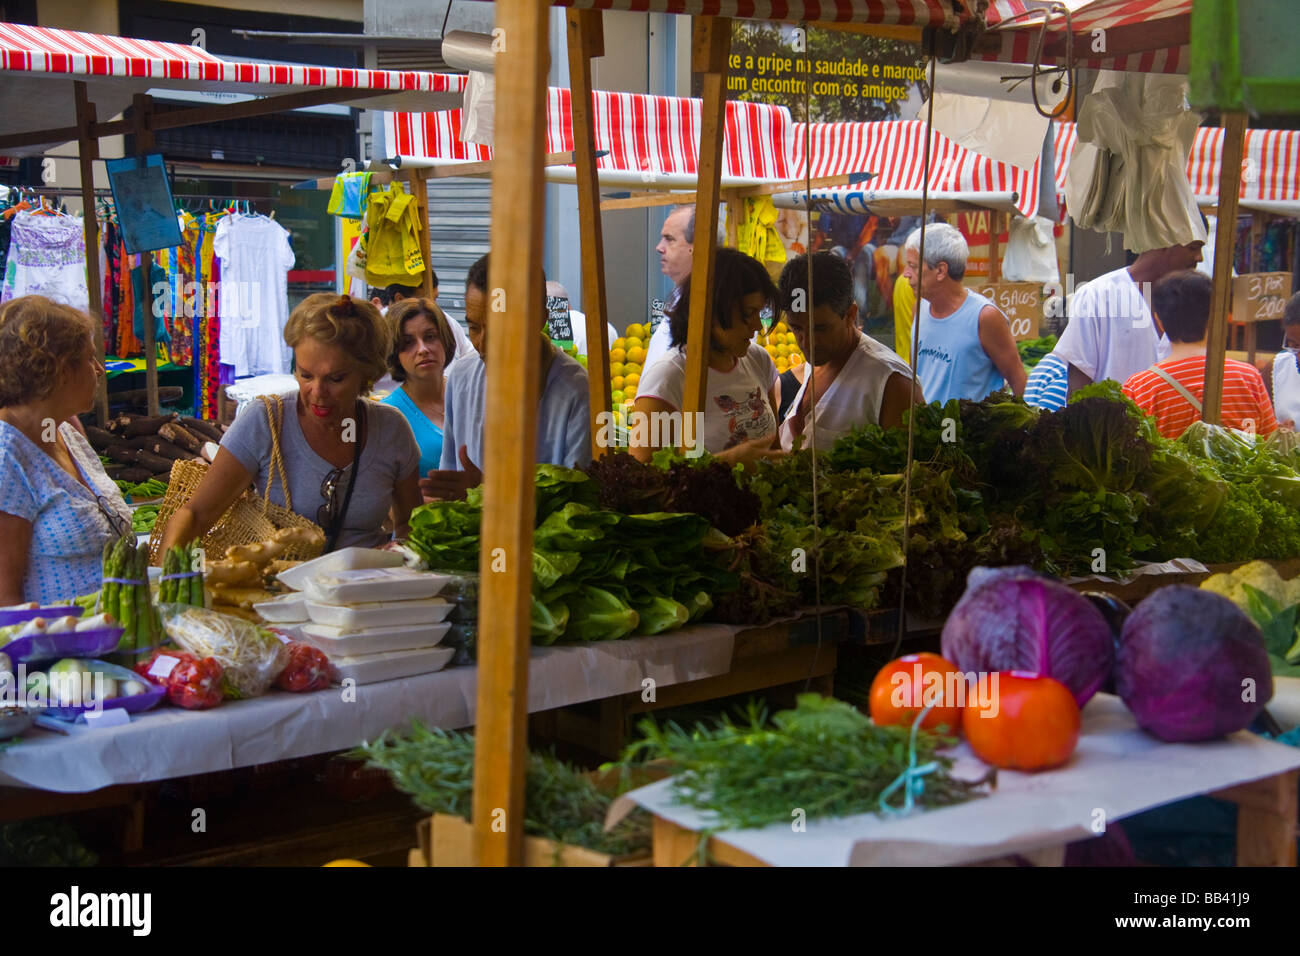 Weekly street market on Ronald de Carvalho street, Copacabana, Rio de Janeiro, Brazil Stock Photo